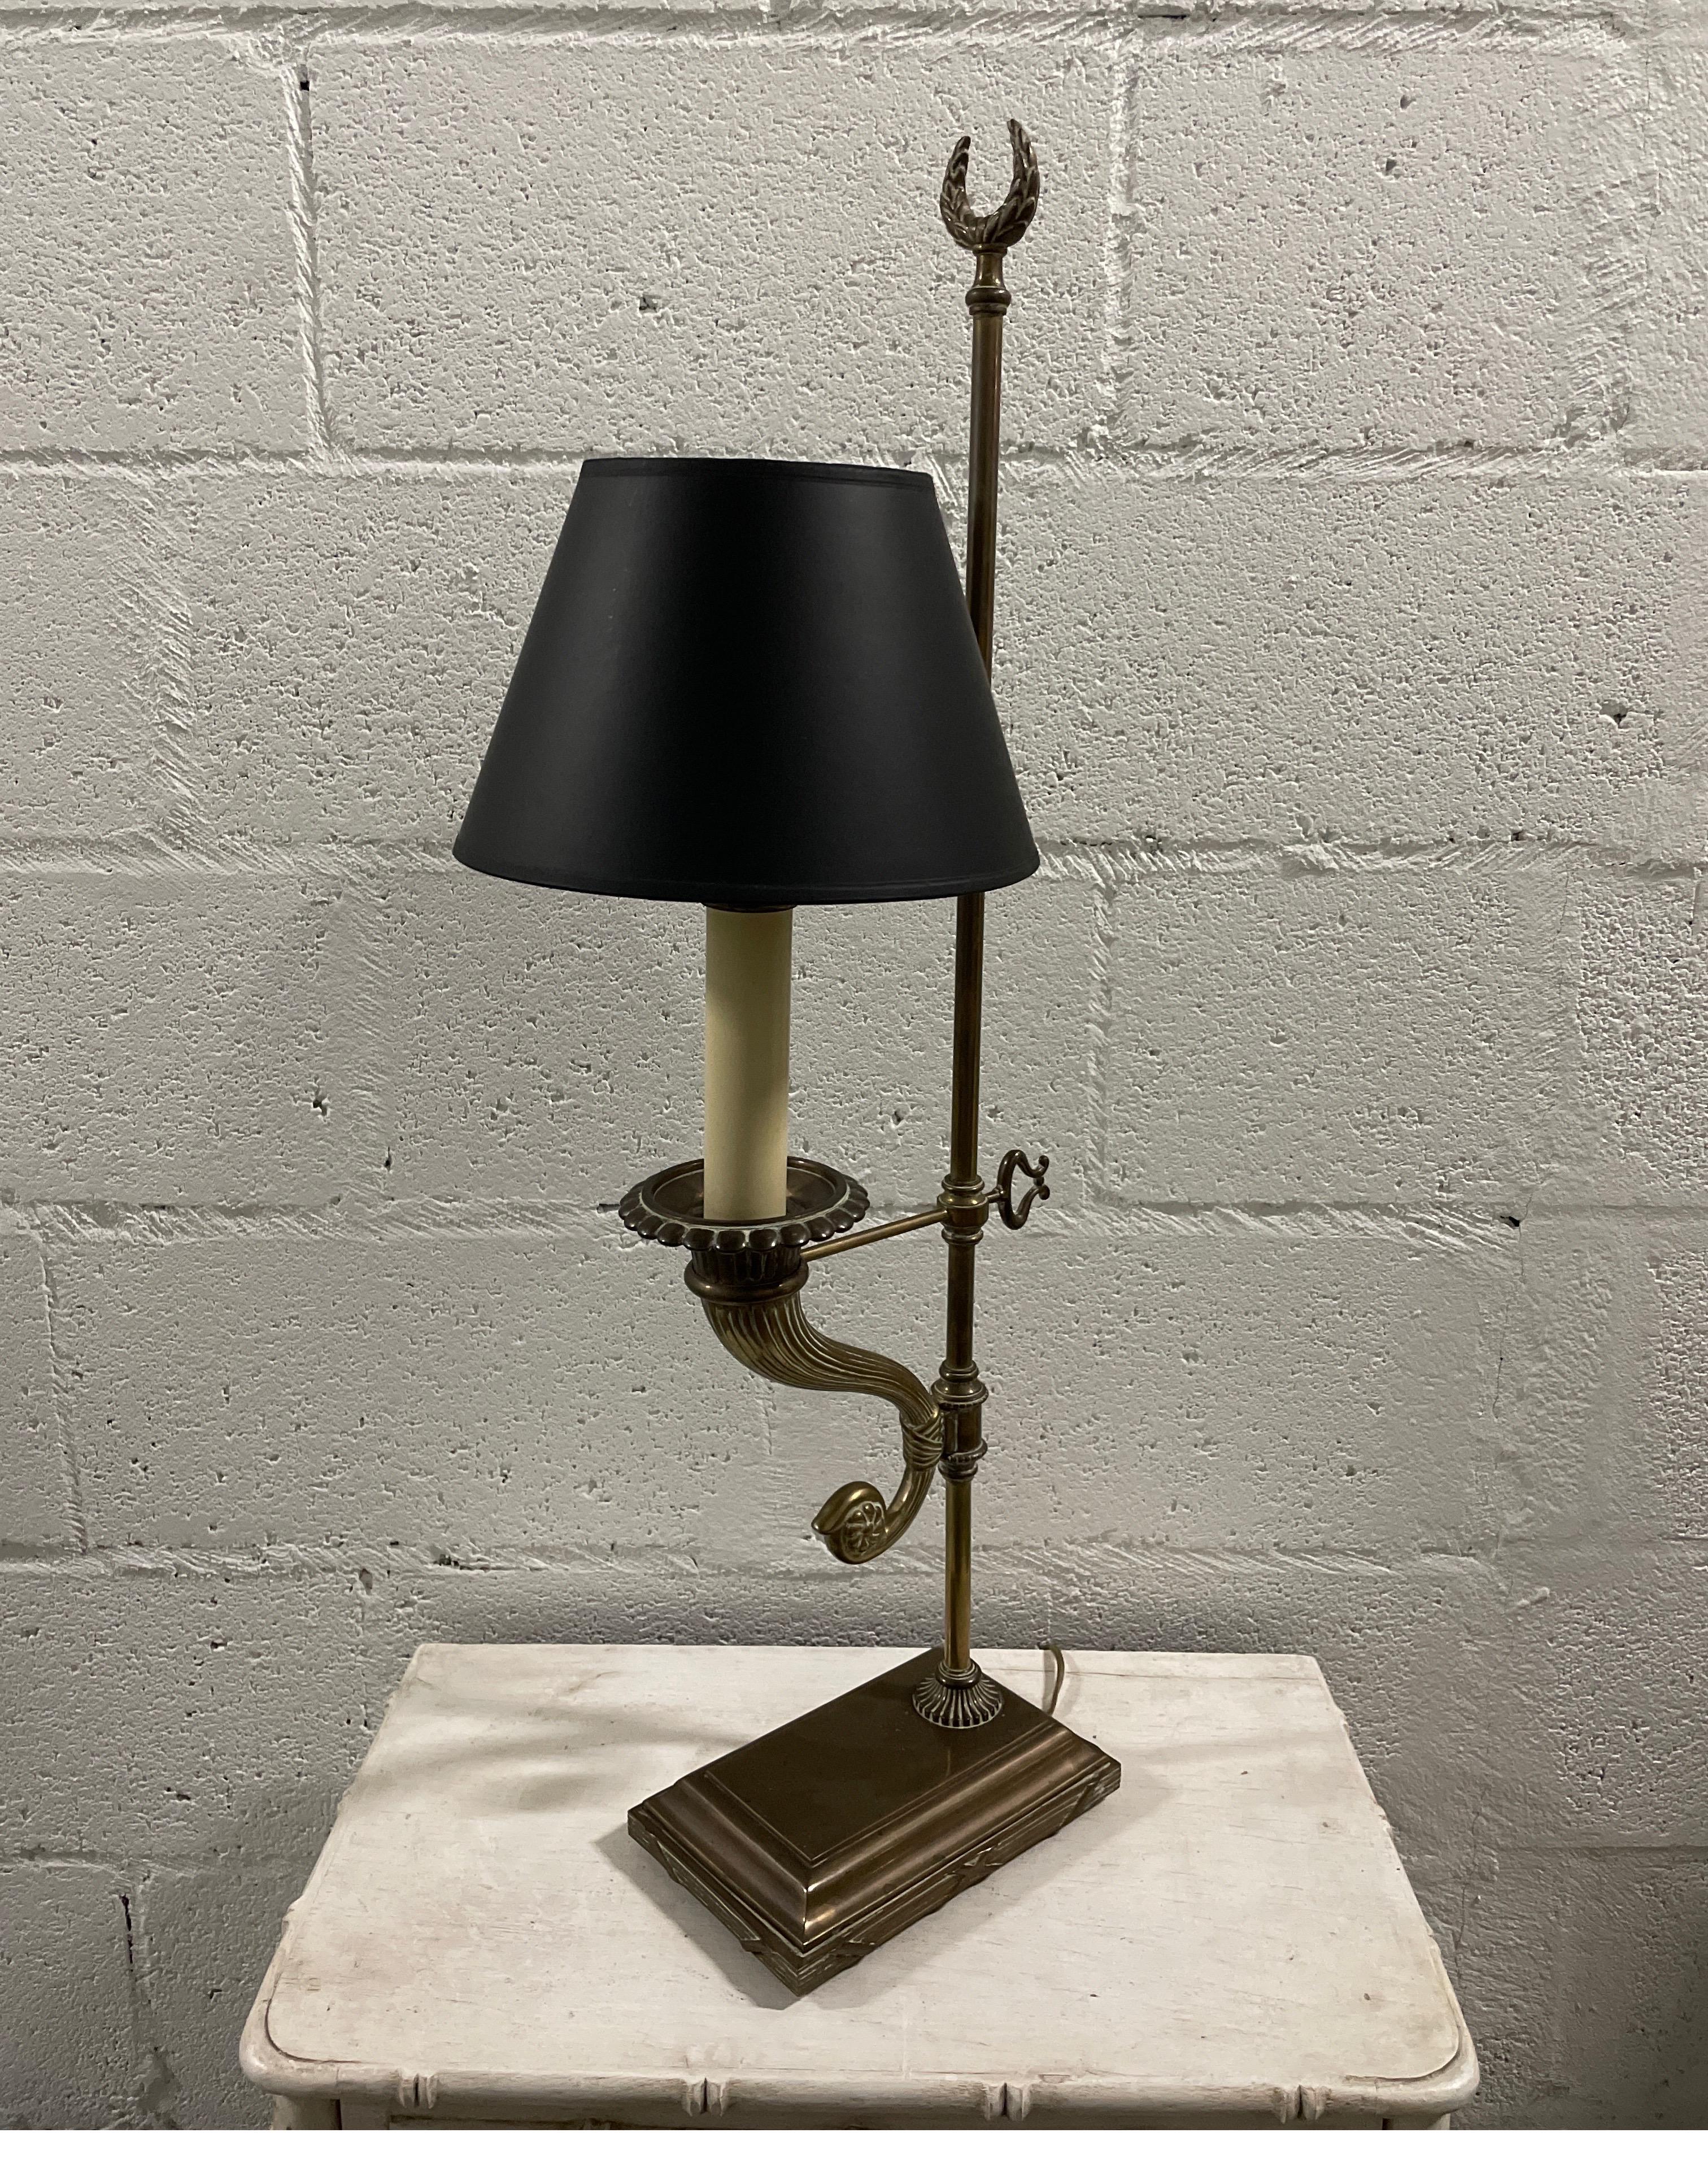 Brass horn of Plenty lamp with beautiful original patina & black shade by Chapman.